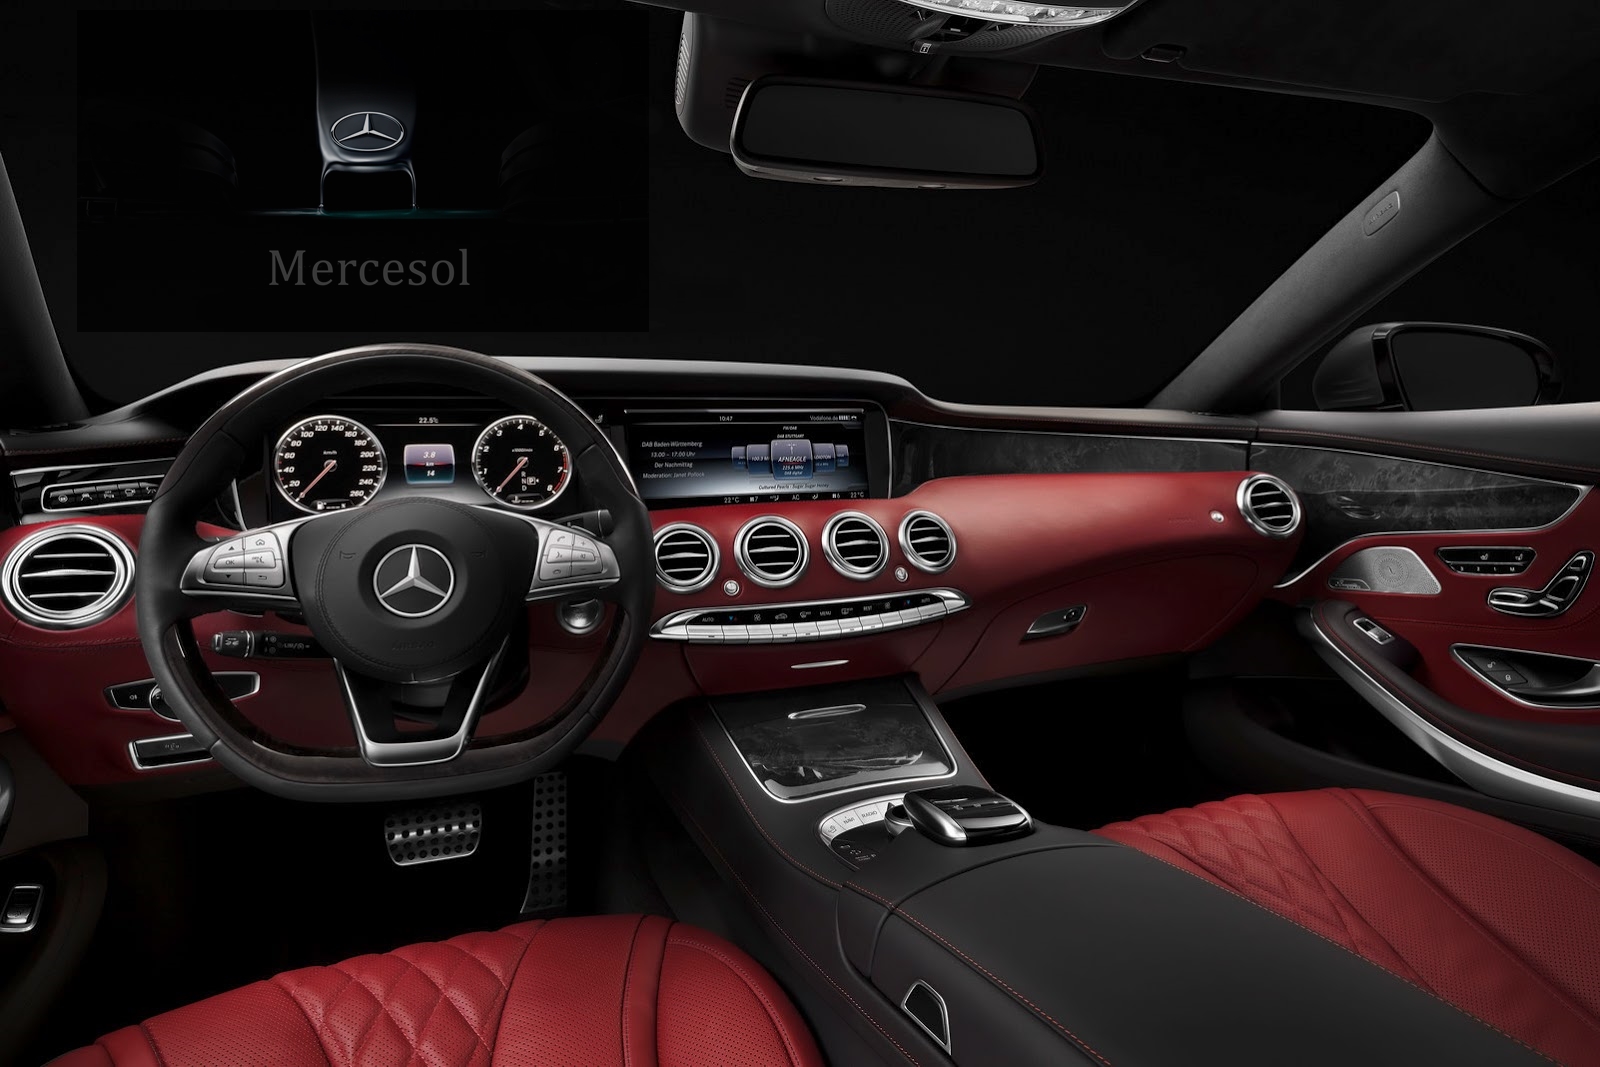 Mercedes Benz S Class Coupe Interior 2 Mercesol